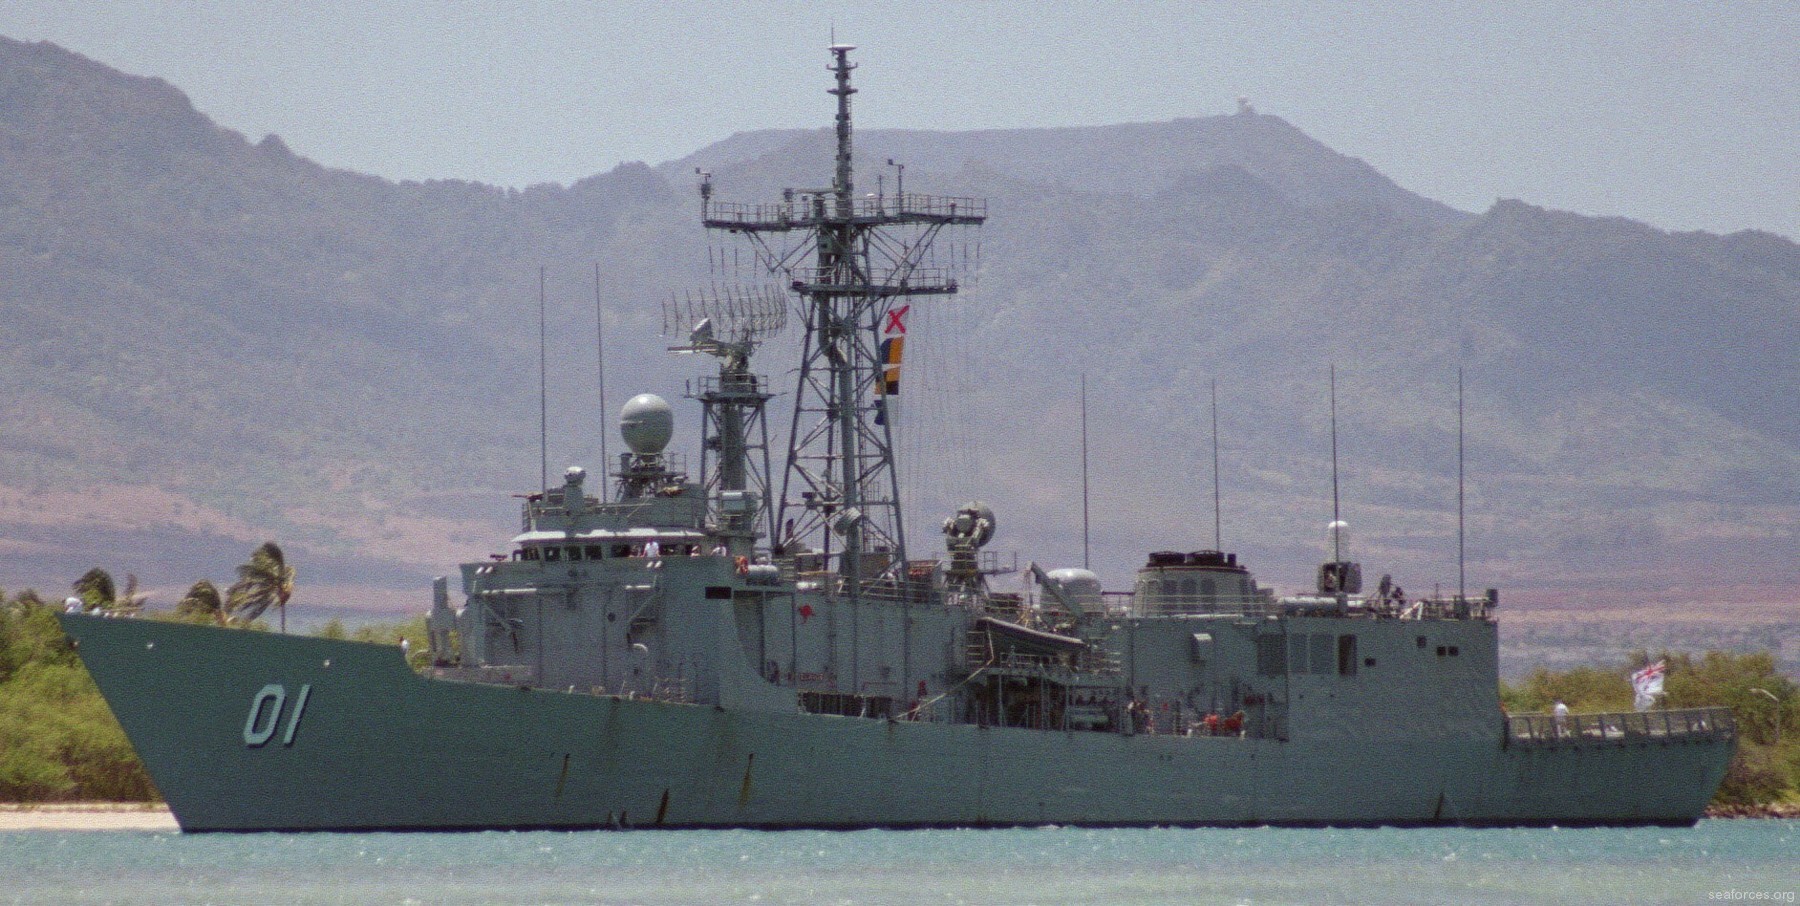 ffg-01 hmas adelaide guided missile frigate royal australian navy 2000 03 pearl harbor hawaii